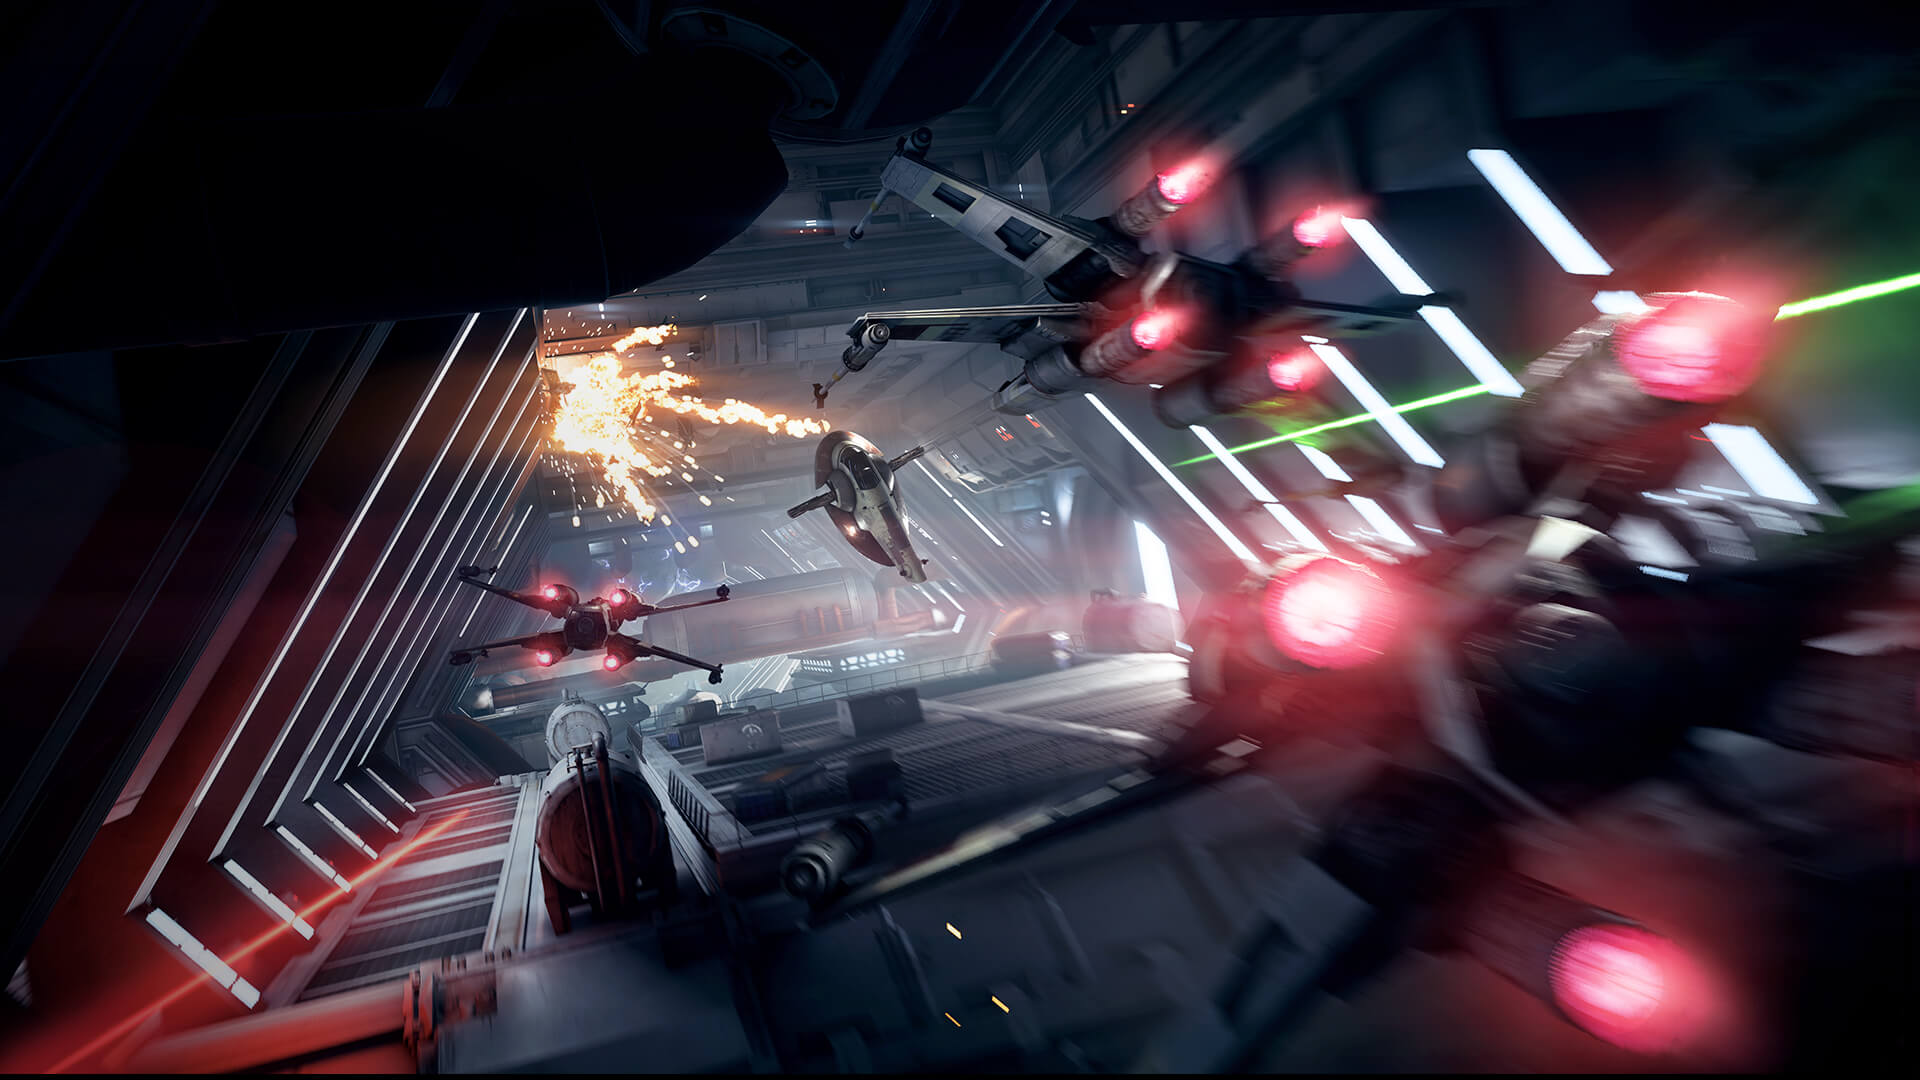 Star Wars Battlefront 2 on Steam Deck, 60 FPS?